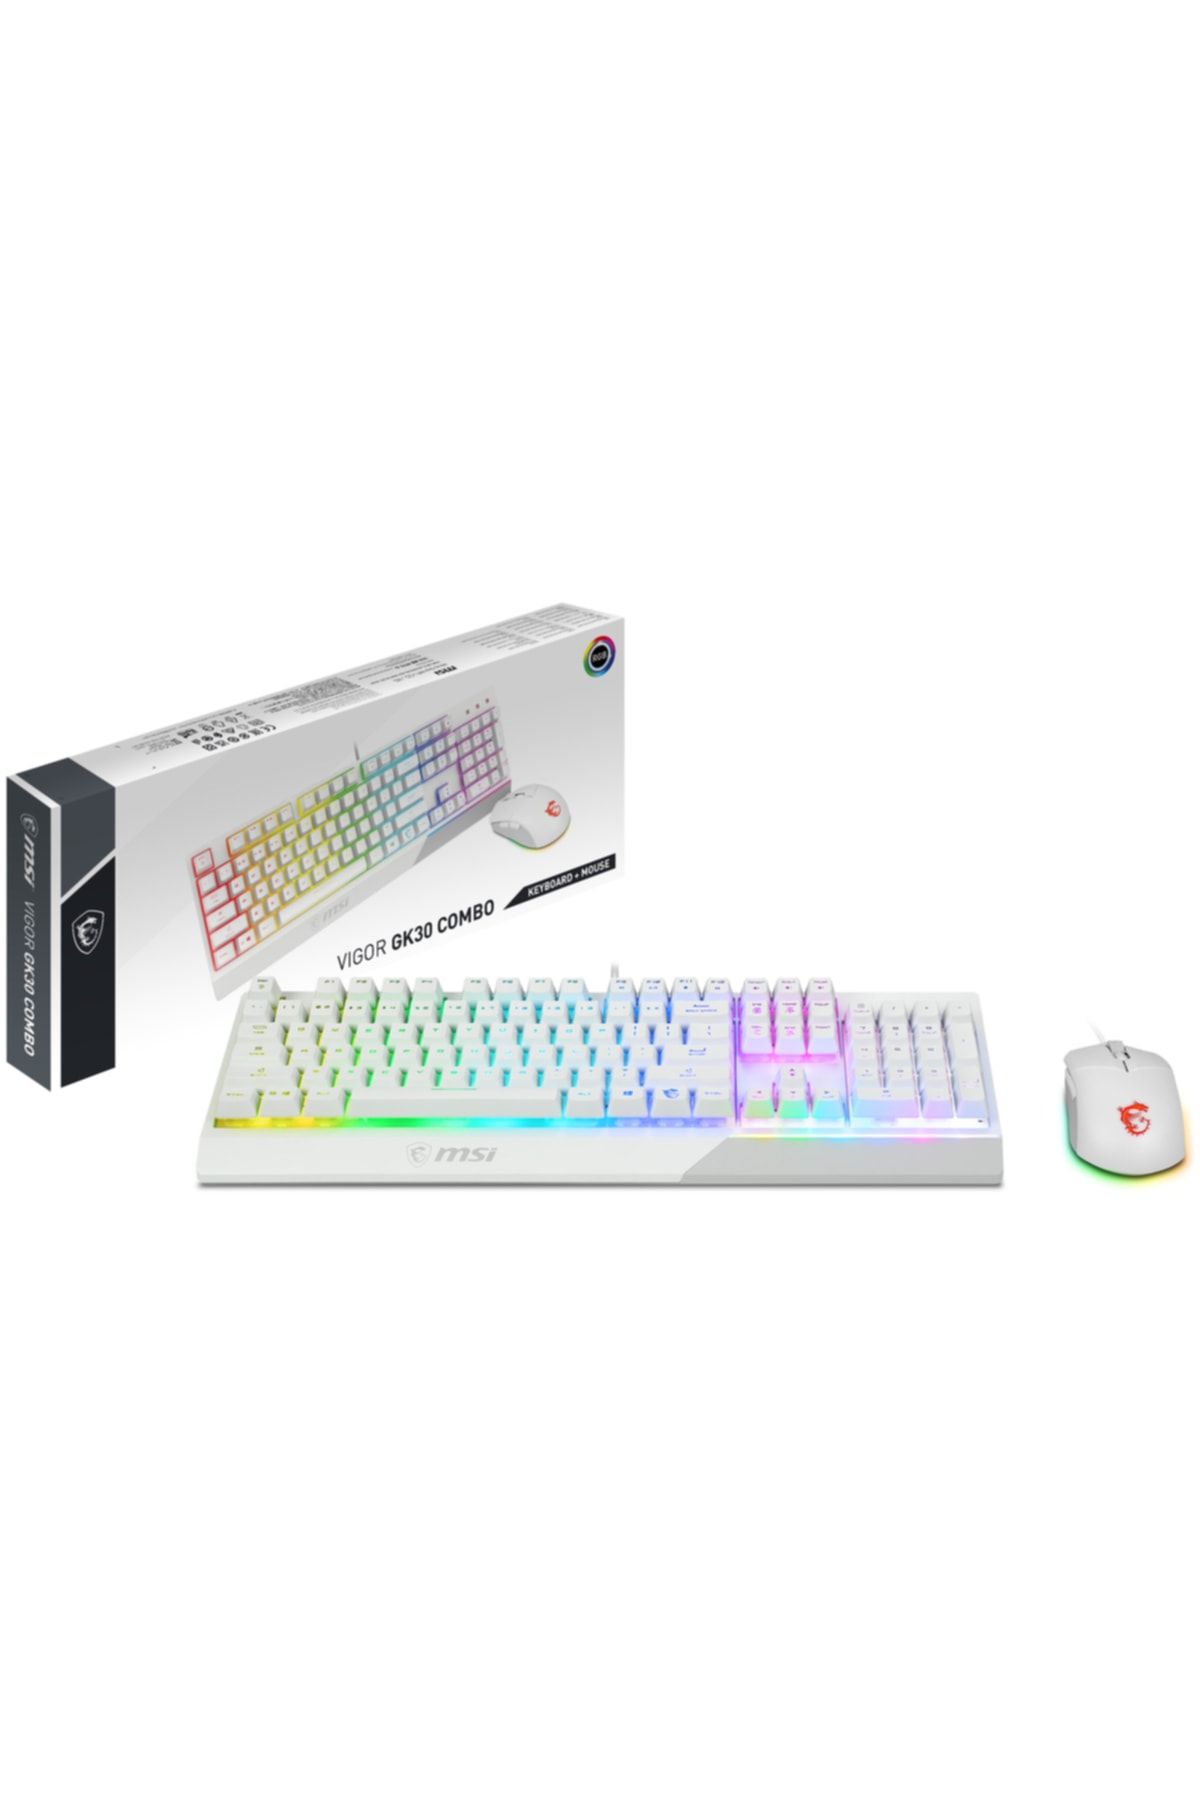 MSI Vigor Gk30 Combo White Rgb Türkçe Clutch Gm11 White Gaming Klavye Mouse Set Beyaz